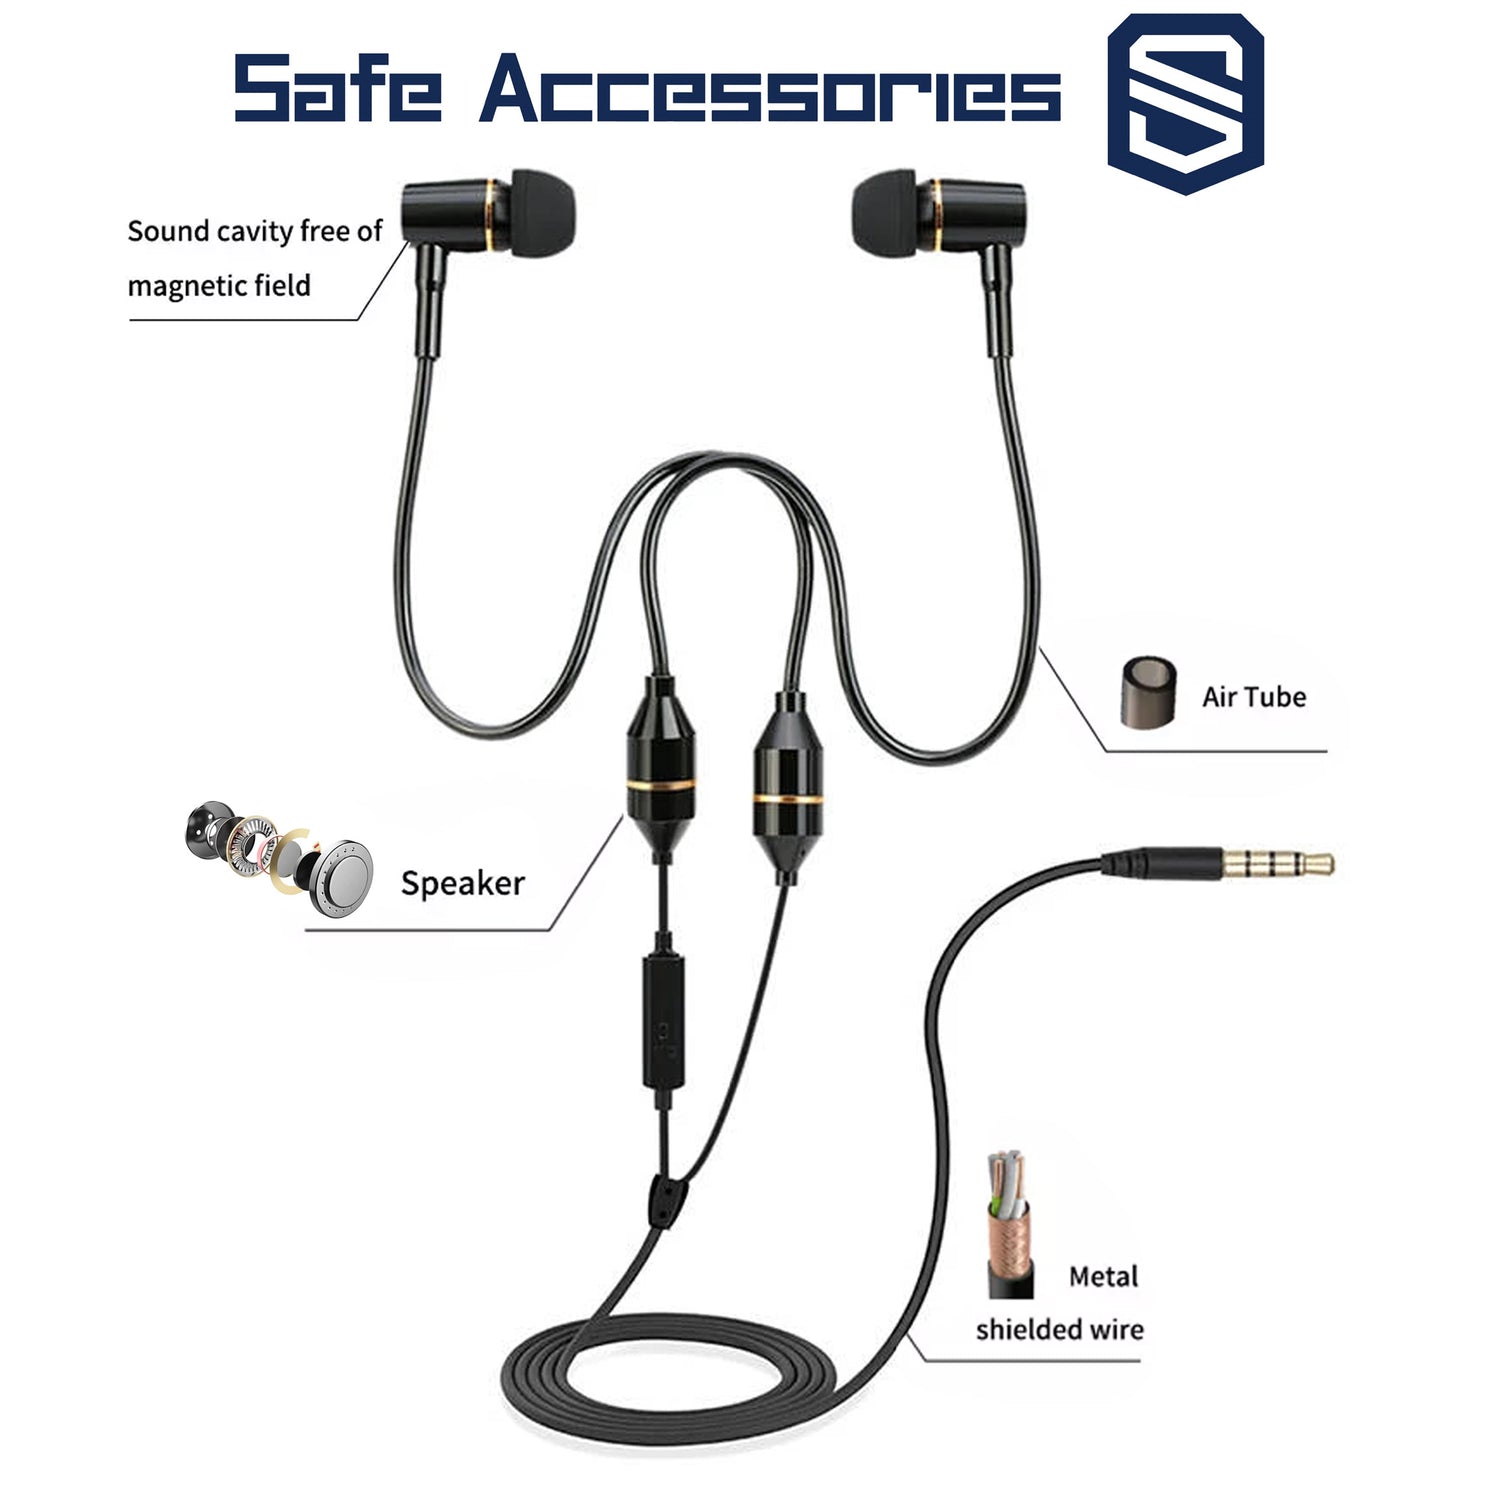 Safest headphones in world, patented innovation for blocking EMF 